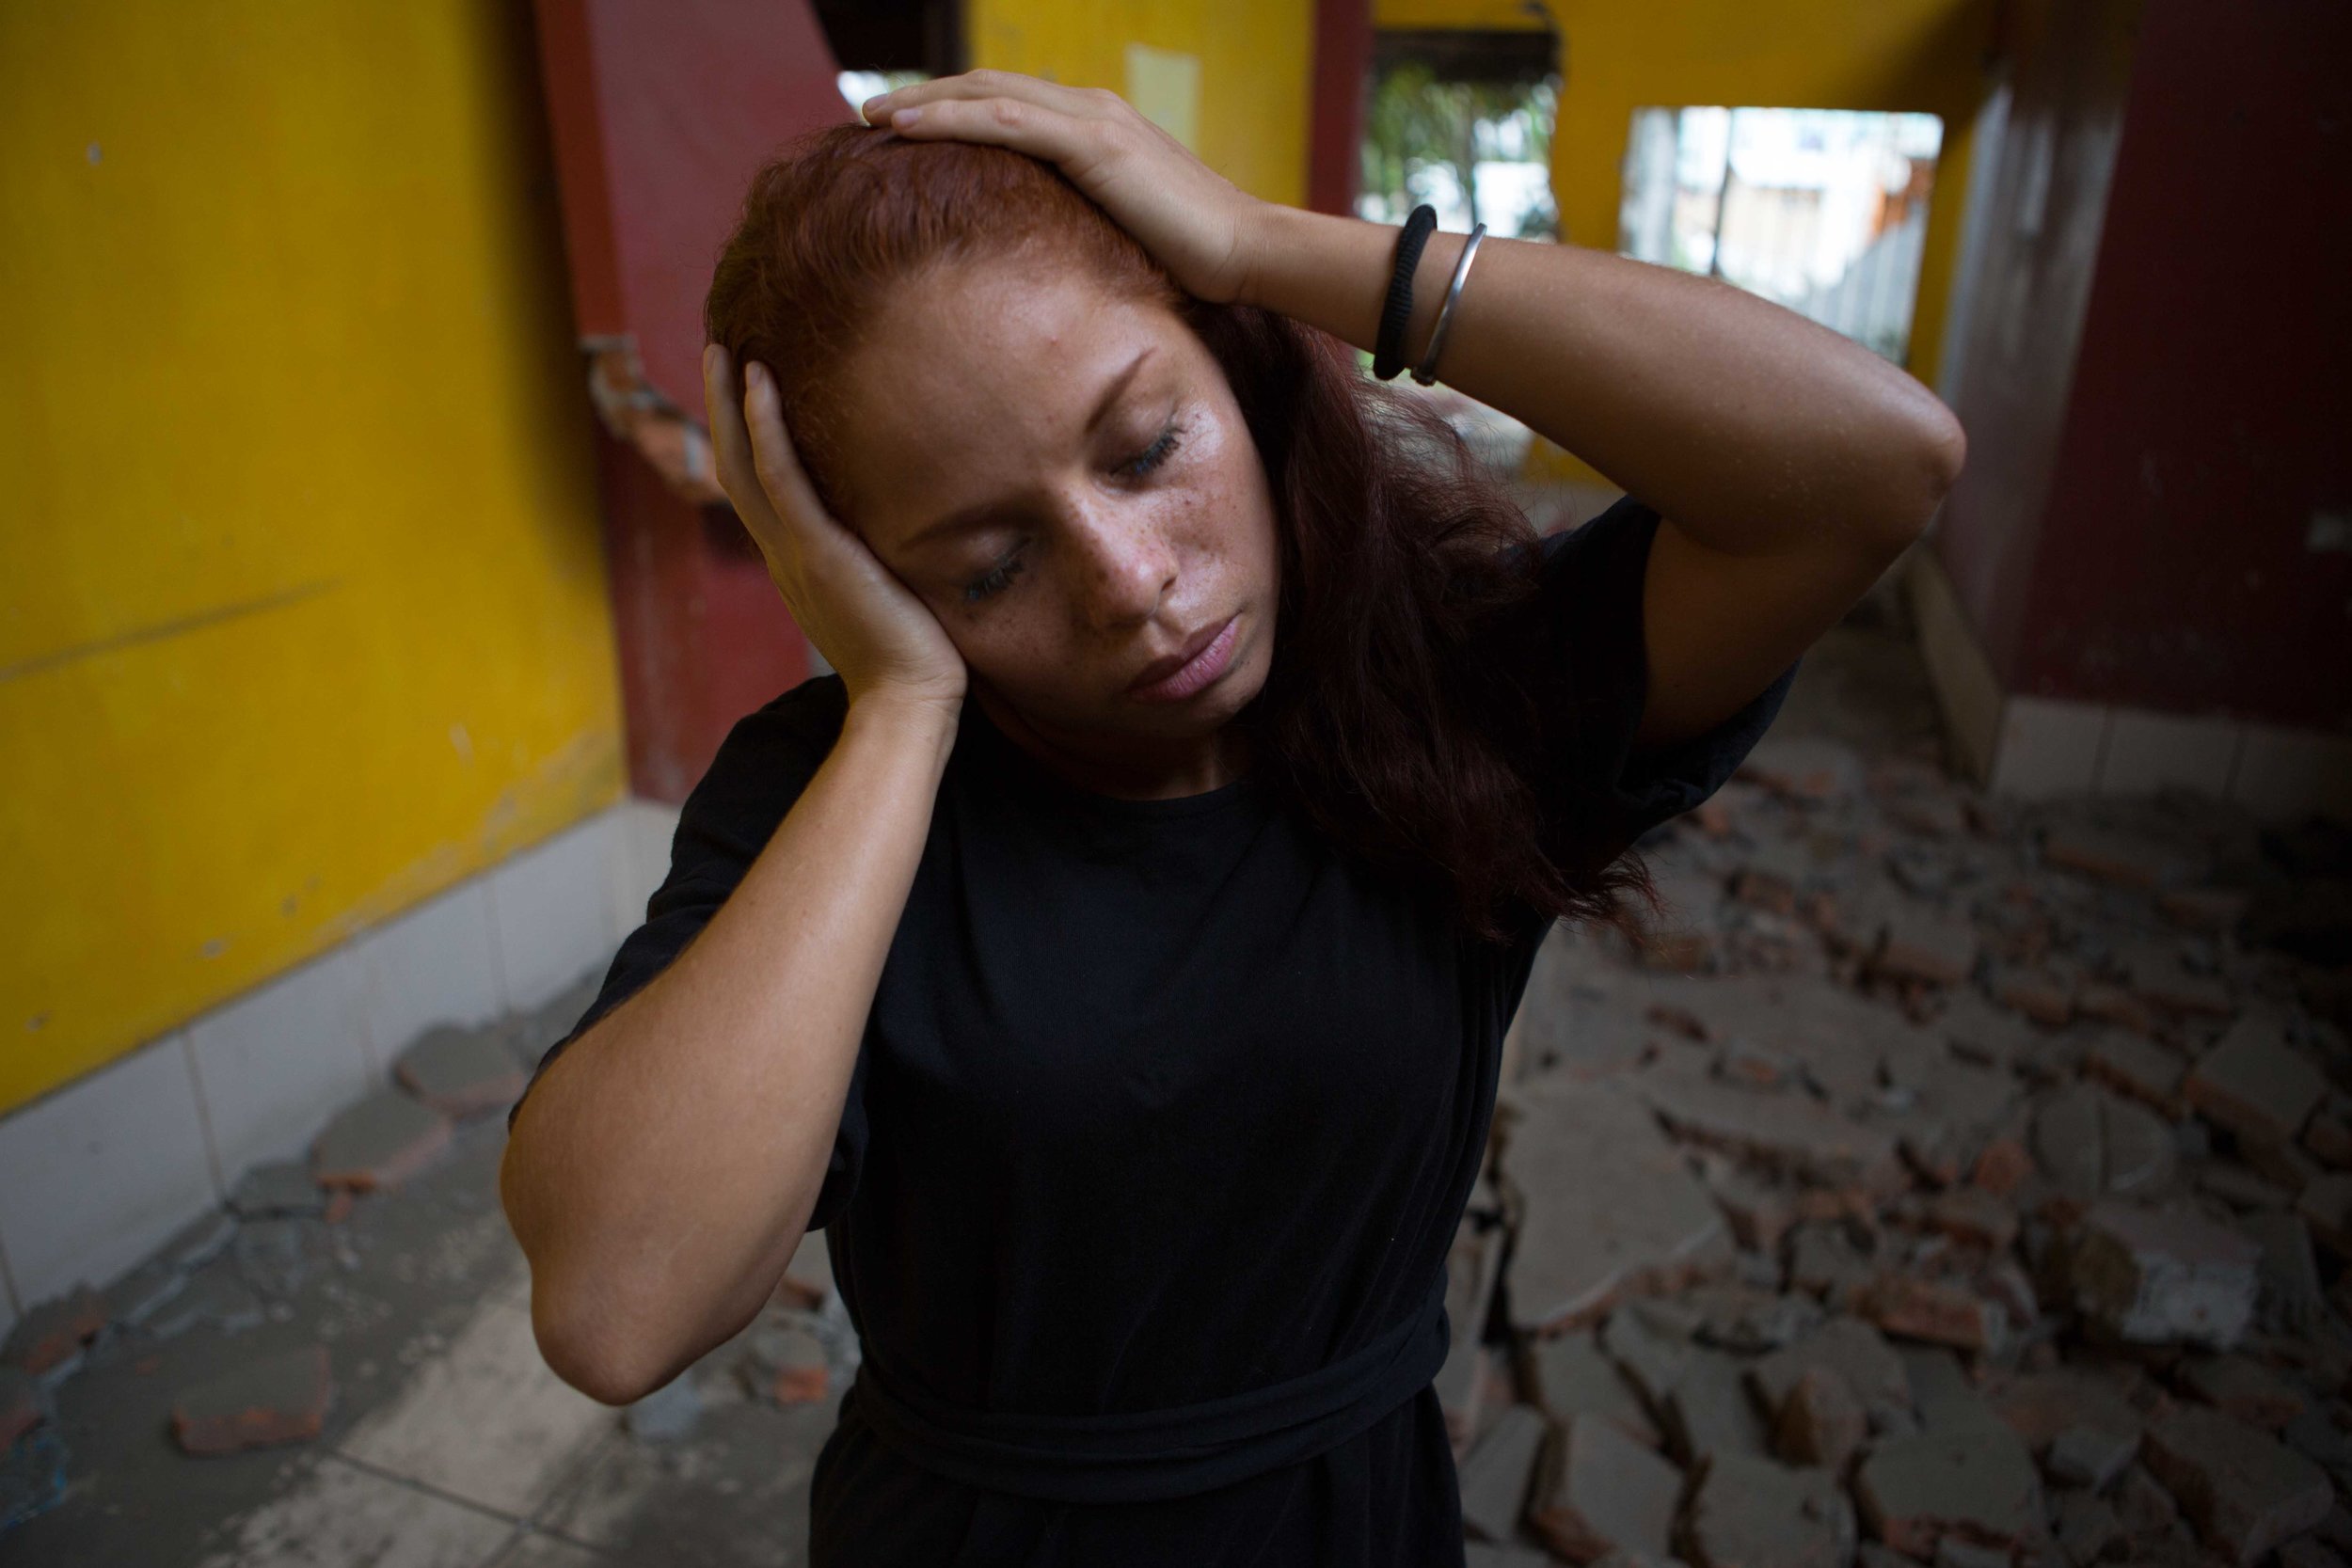  Women stands amongst earth quake rubble in Pedernales, Ecuador 2016.&nbsp; 